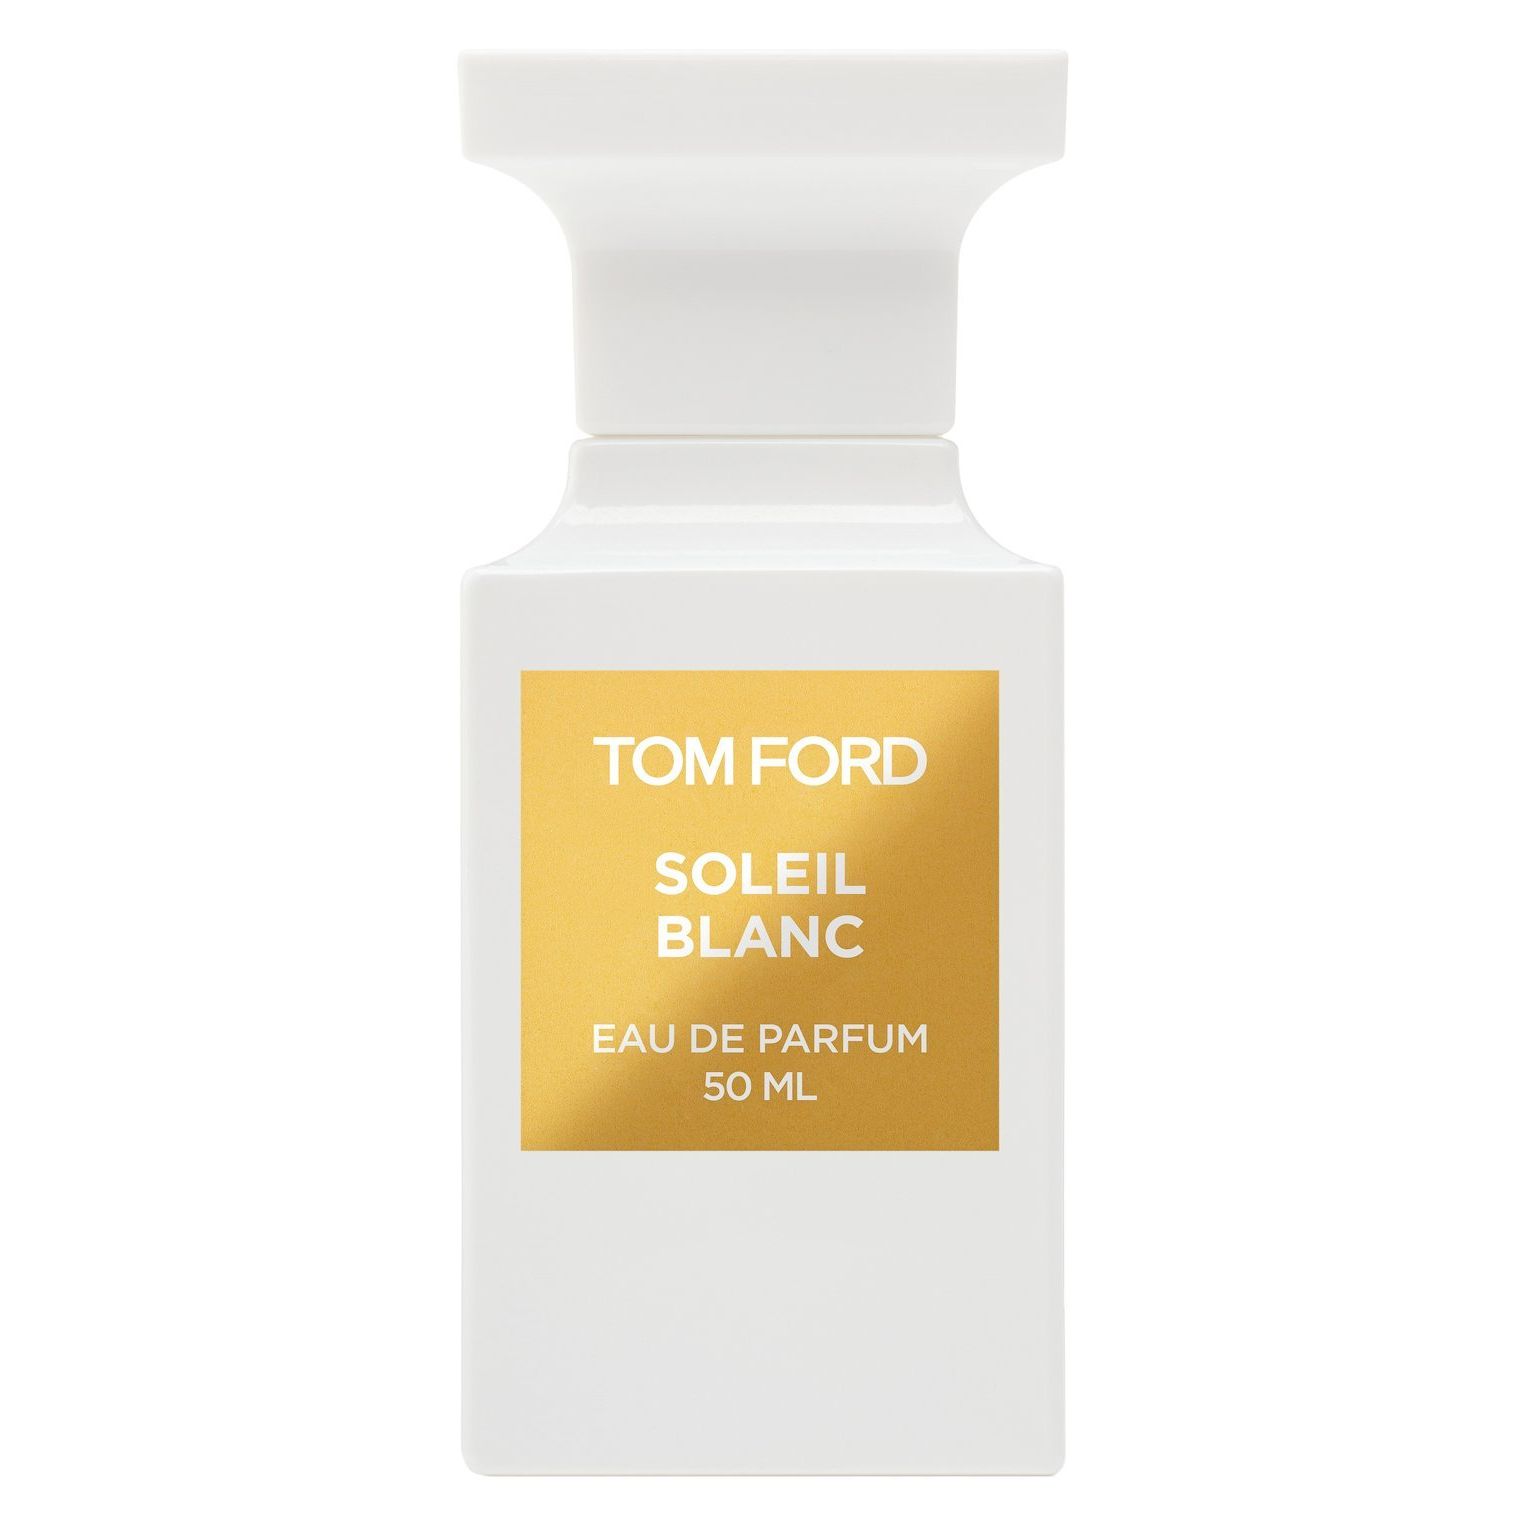 Вода парфюмерная Tom Ford Soleil Blanc, унисекс, 50 мл tom ford хайлайтер soleil neige